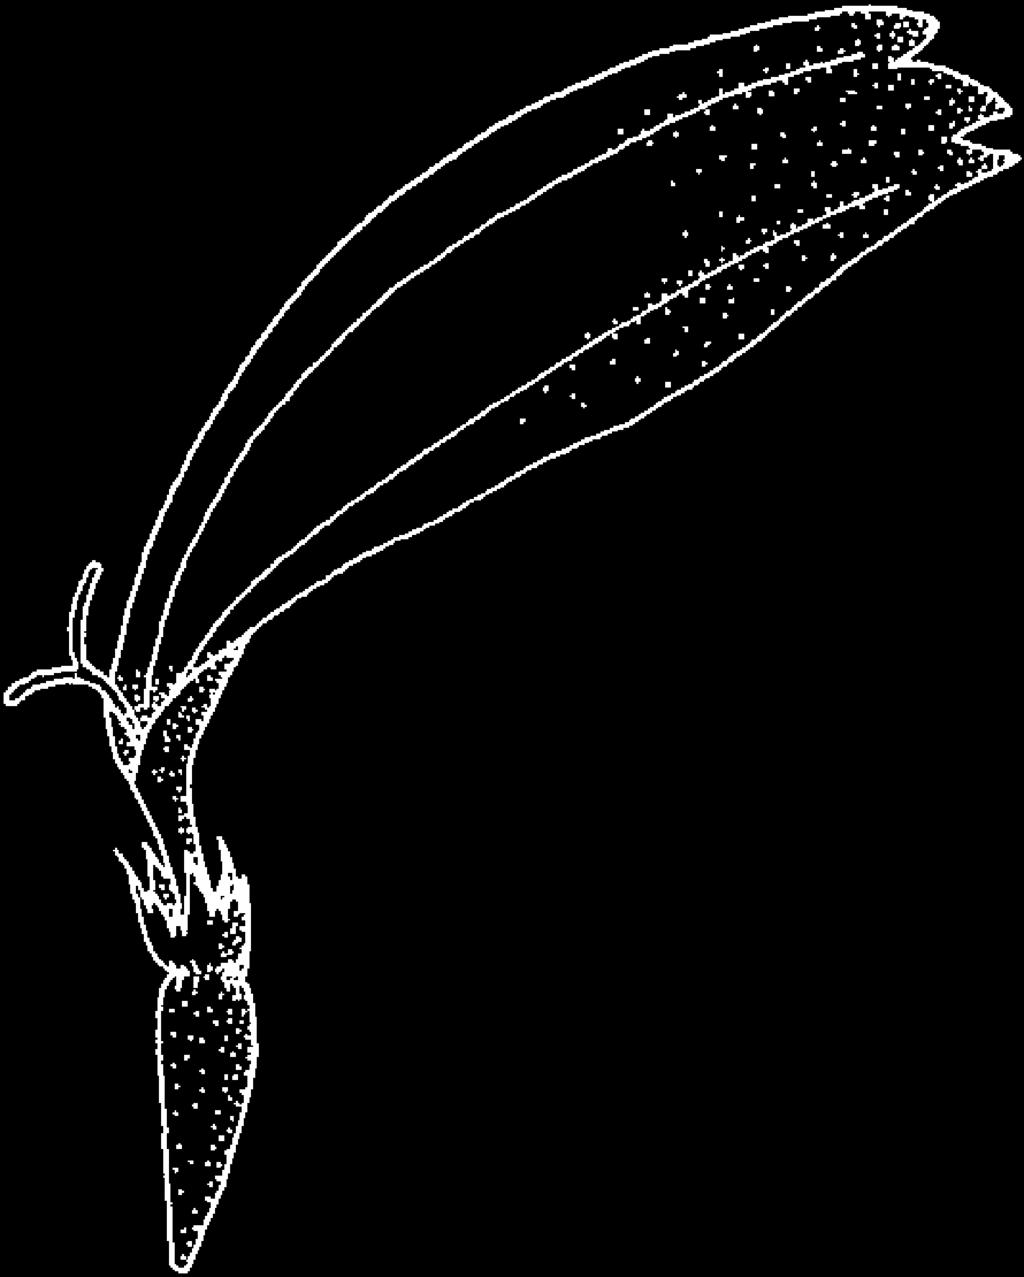 Styliferous pistillate ray floret of